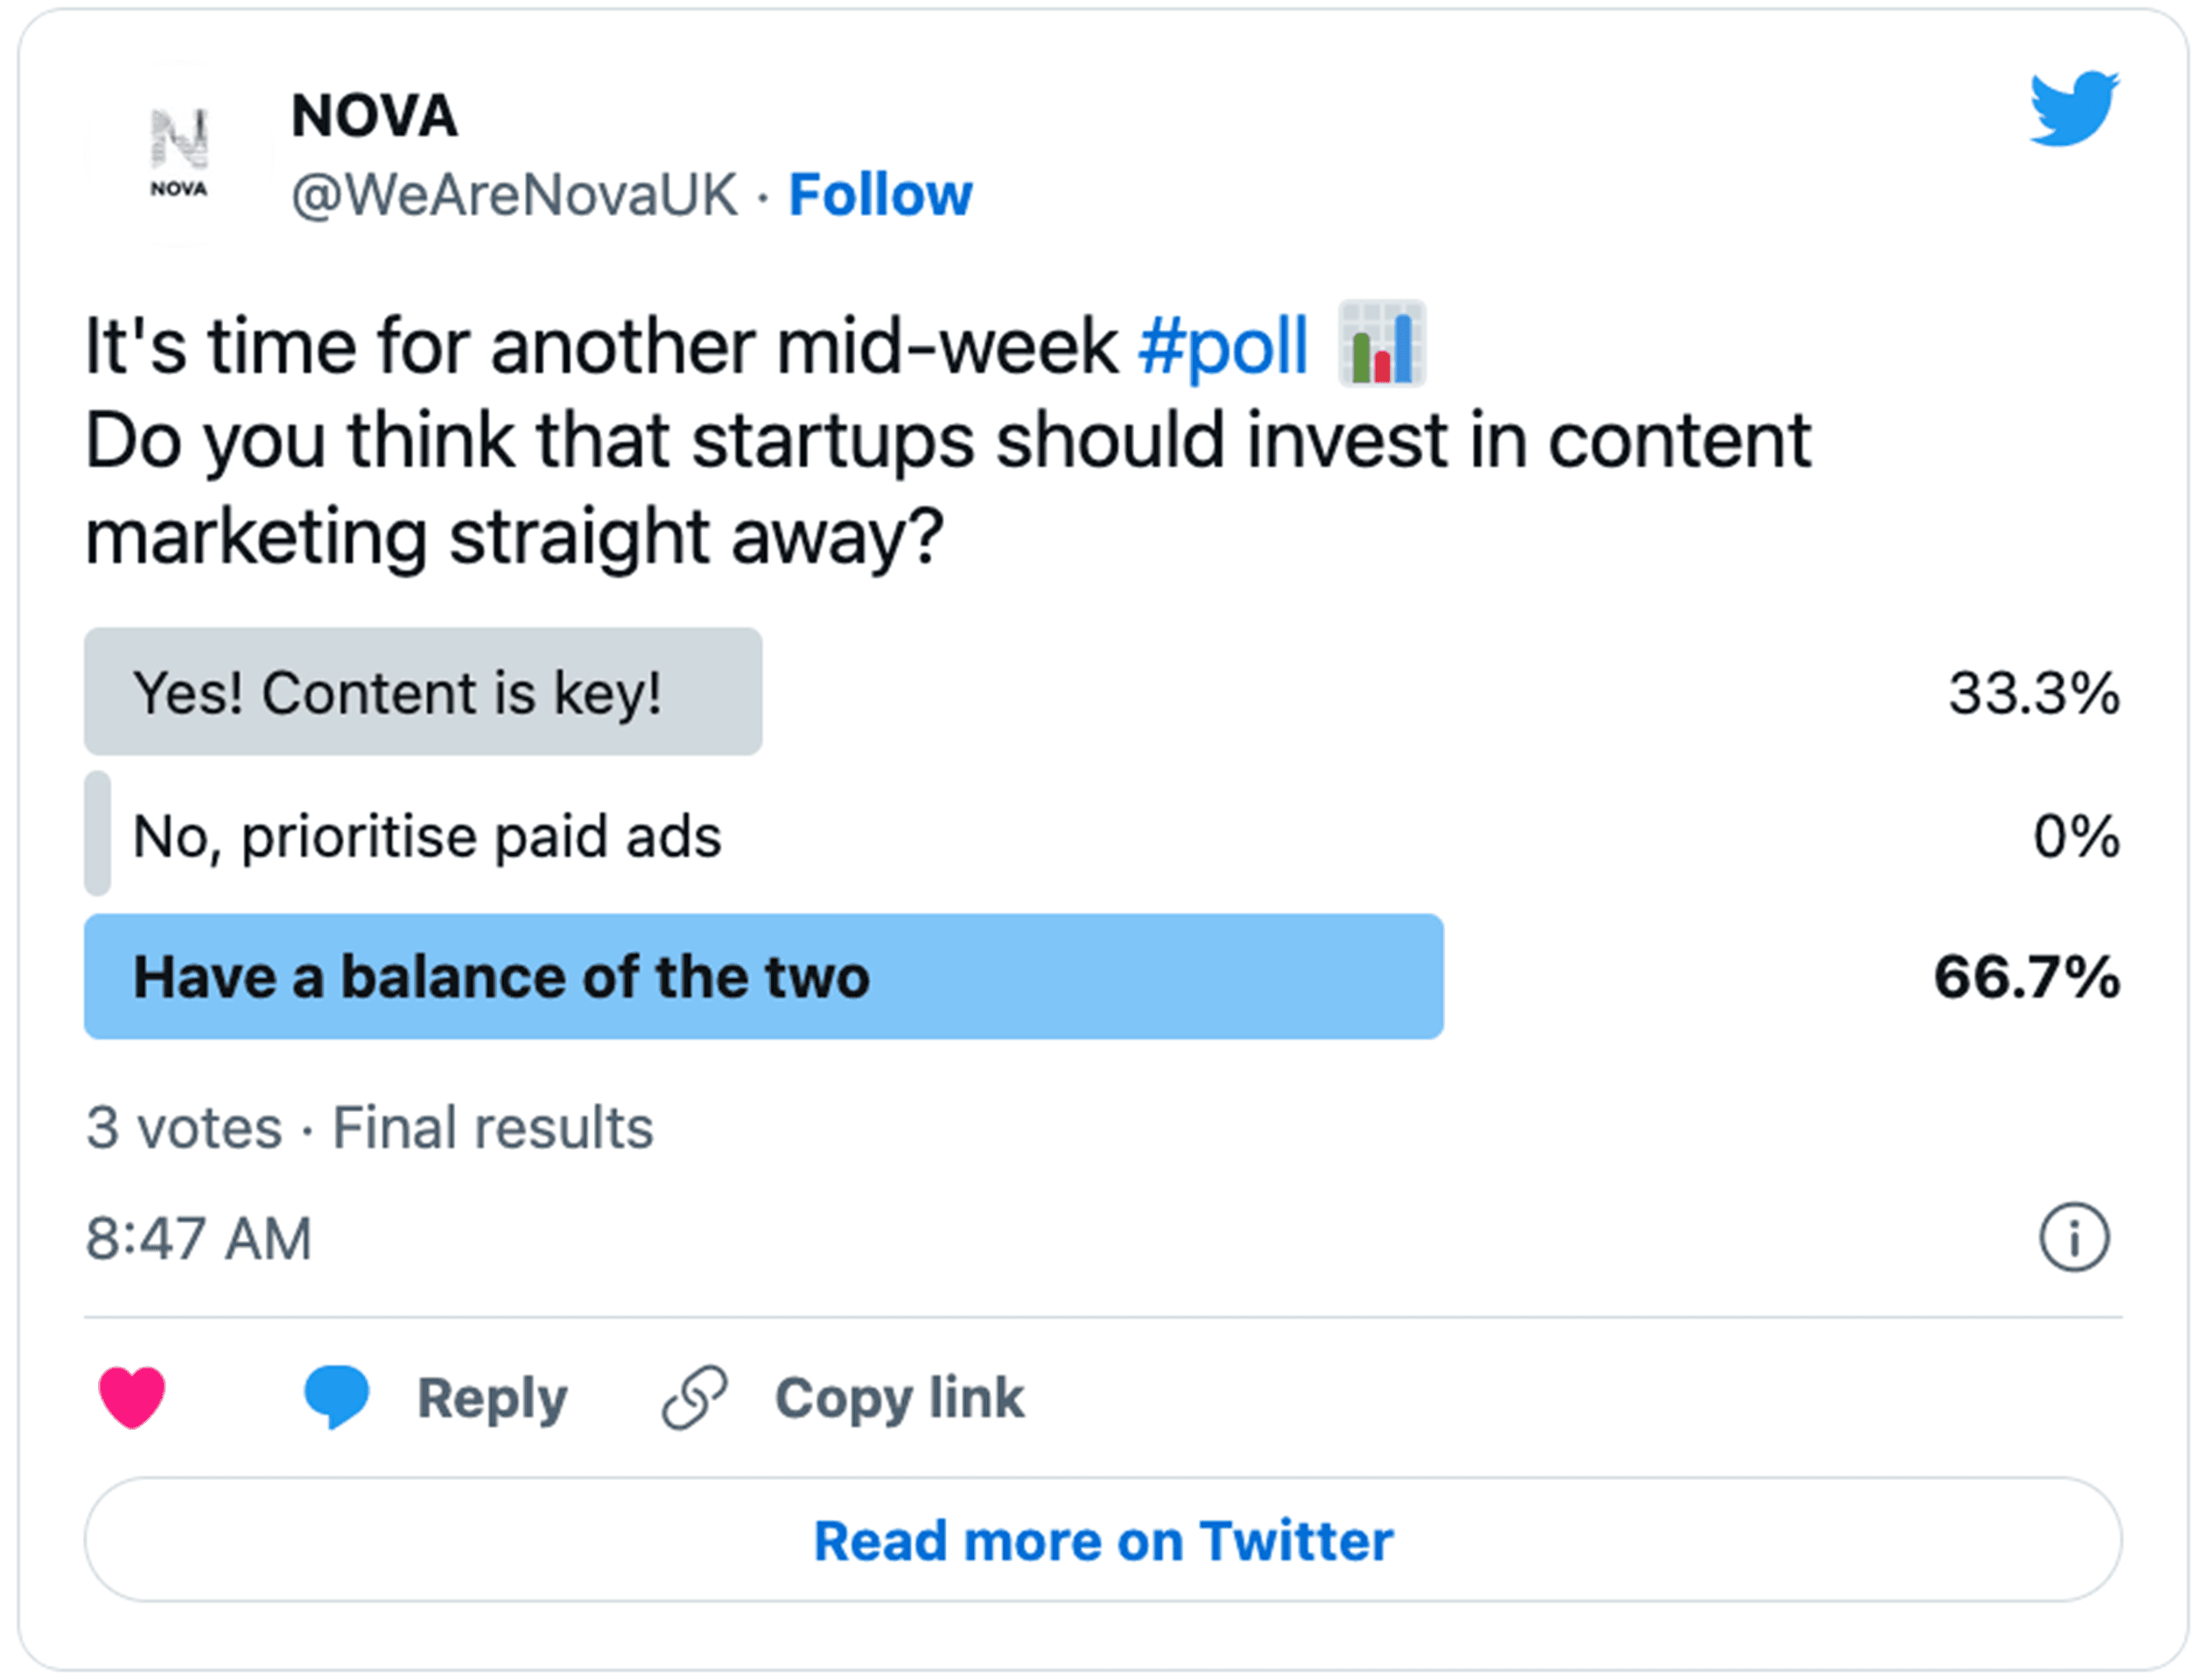 Customer feedback poll from NOVA